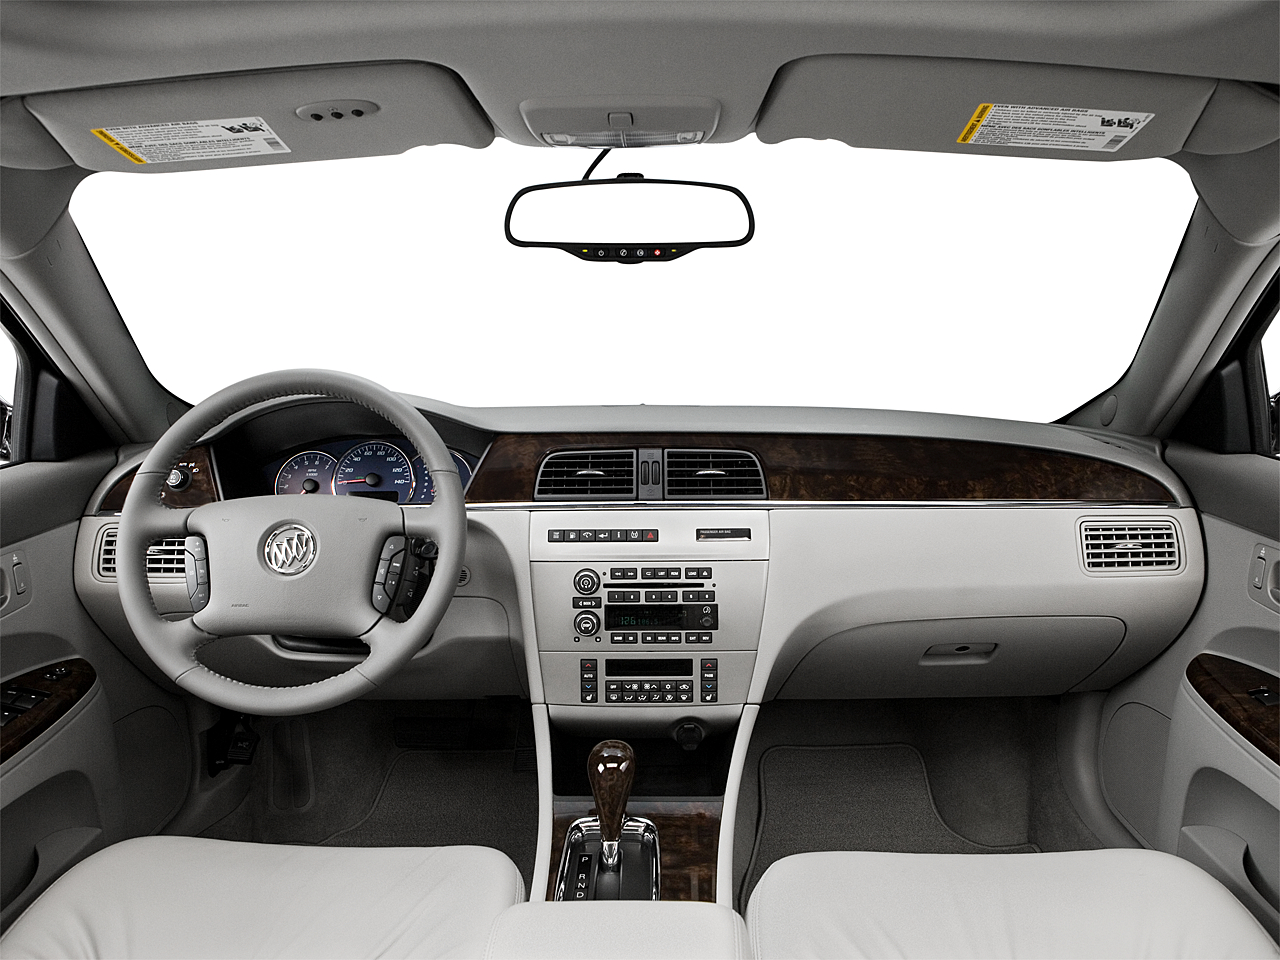 2008 Buick LaCrosse Super 4dr Sedan - Research - GrooveCar